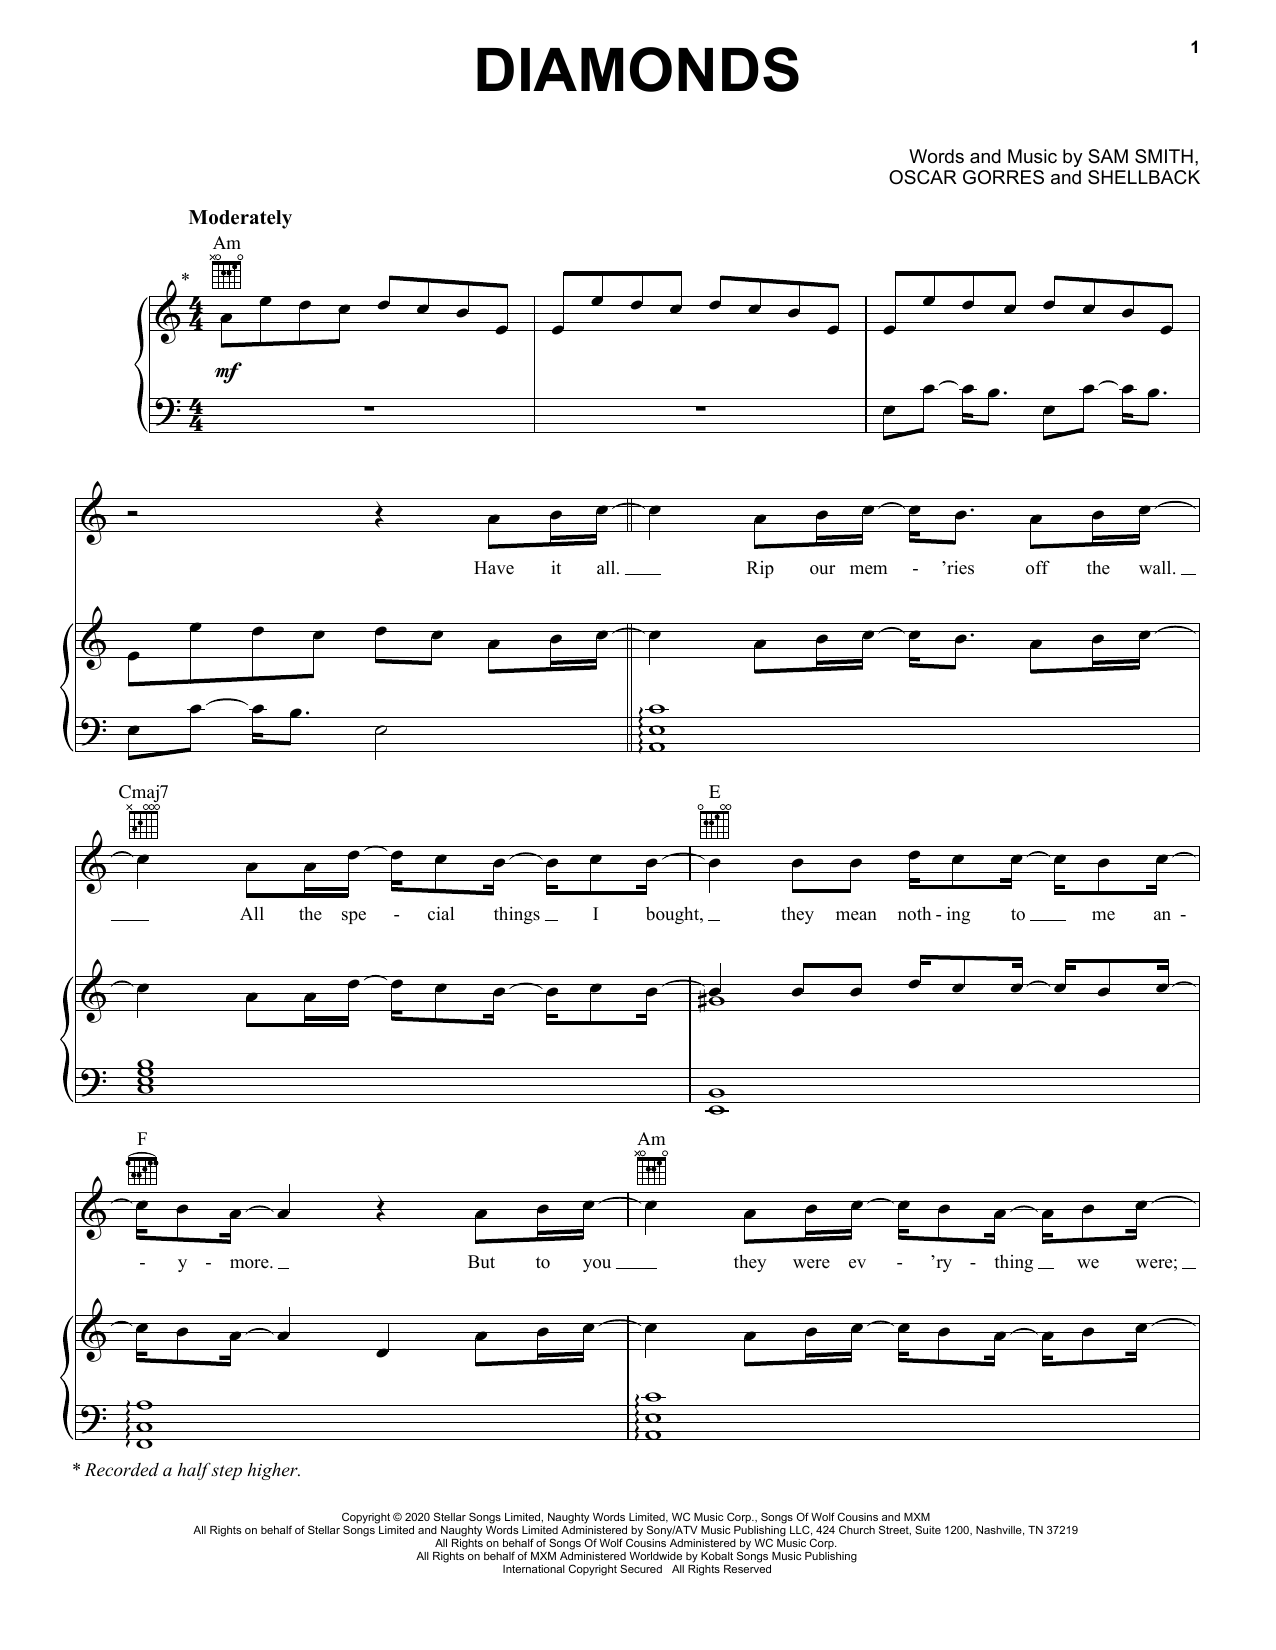 Sam Smith Diamonds Sheet Music Notes & Chords for Ukulele - Download or Print PDF